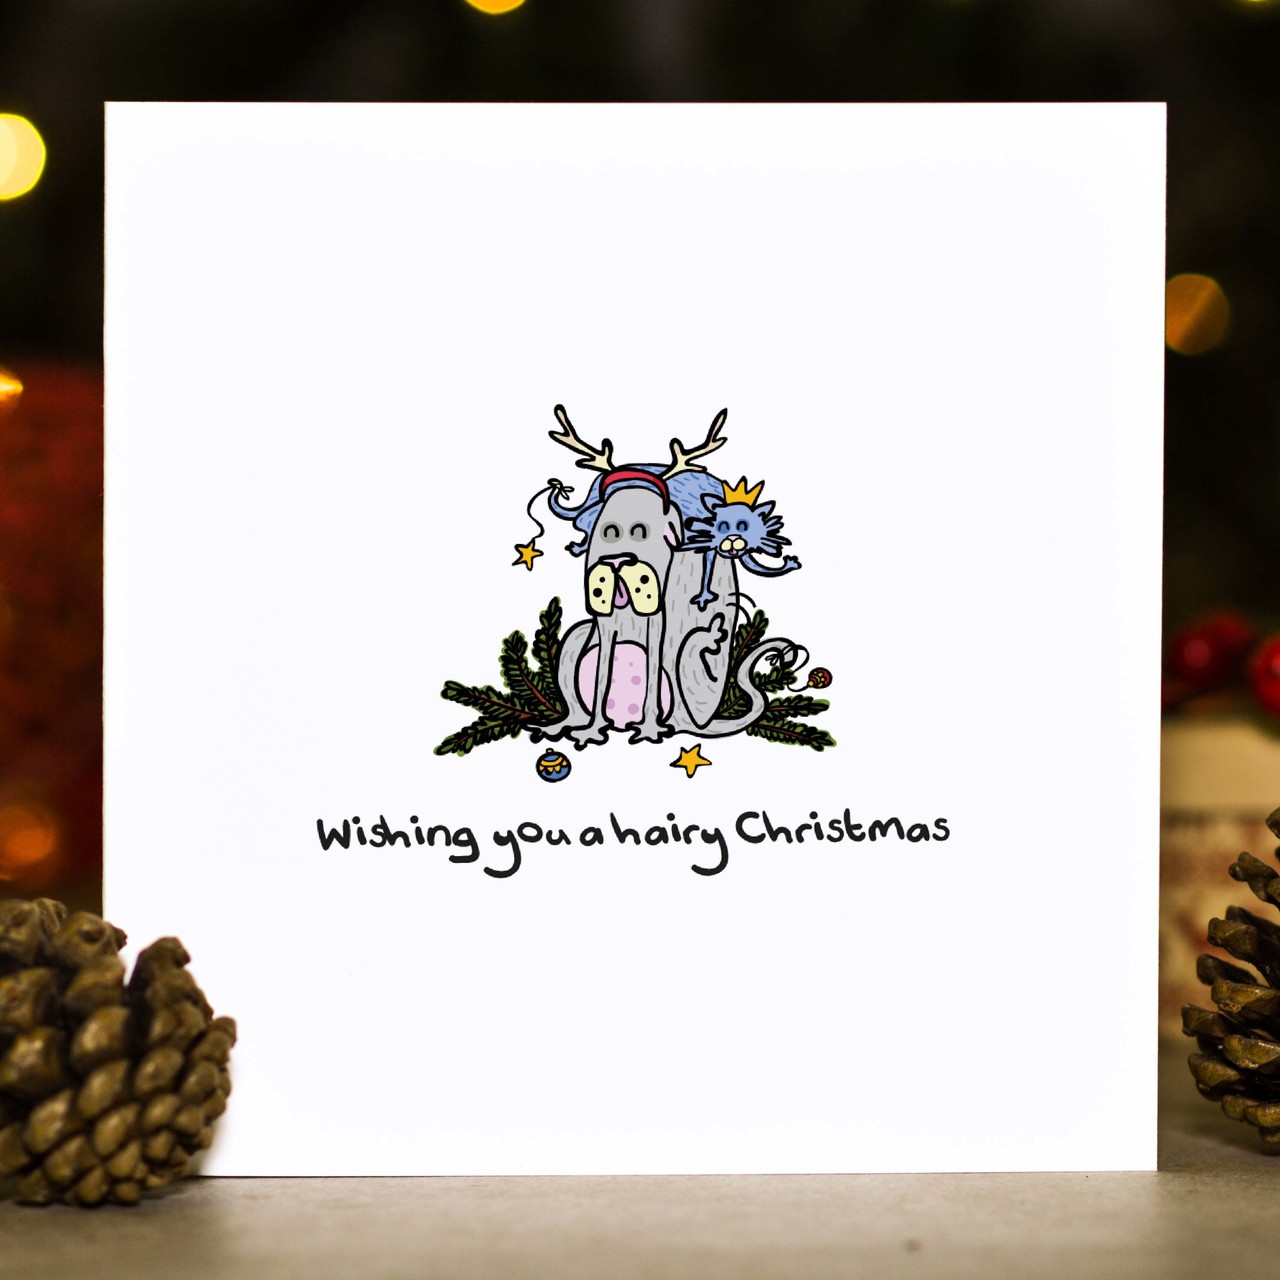 Wishing you a hairy Christmas Card